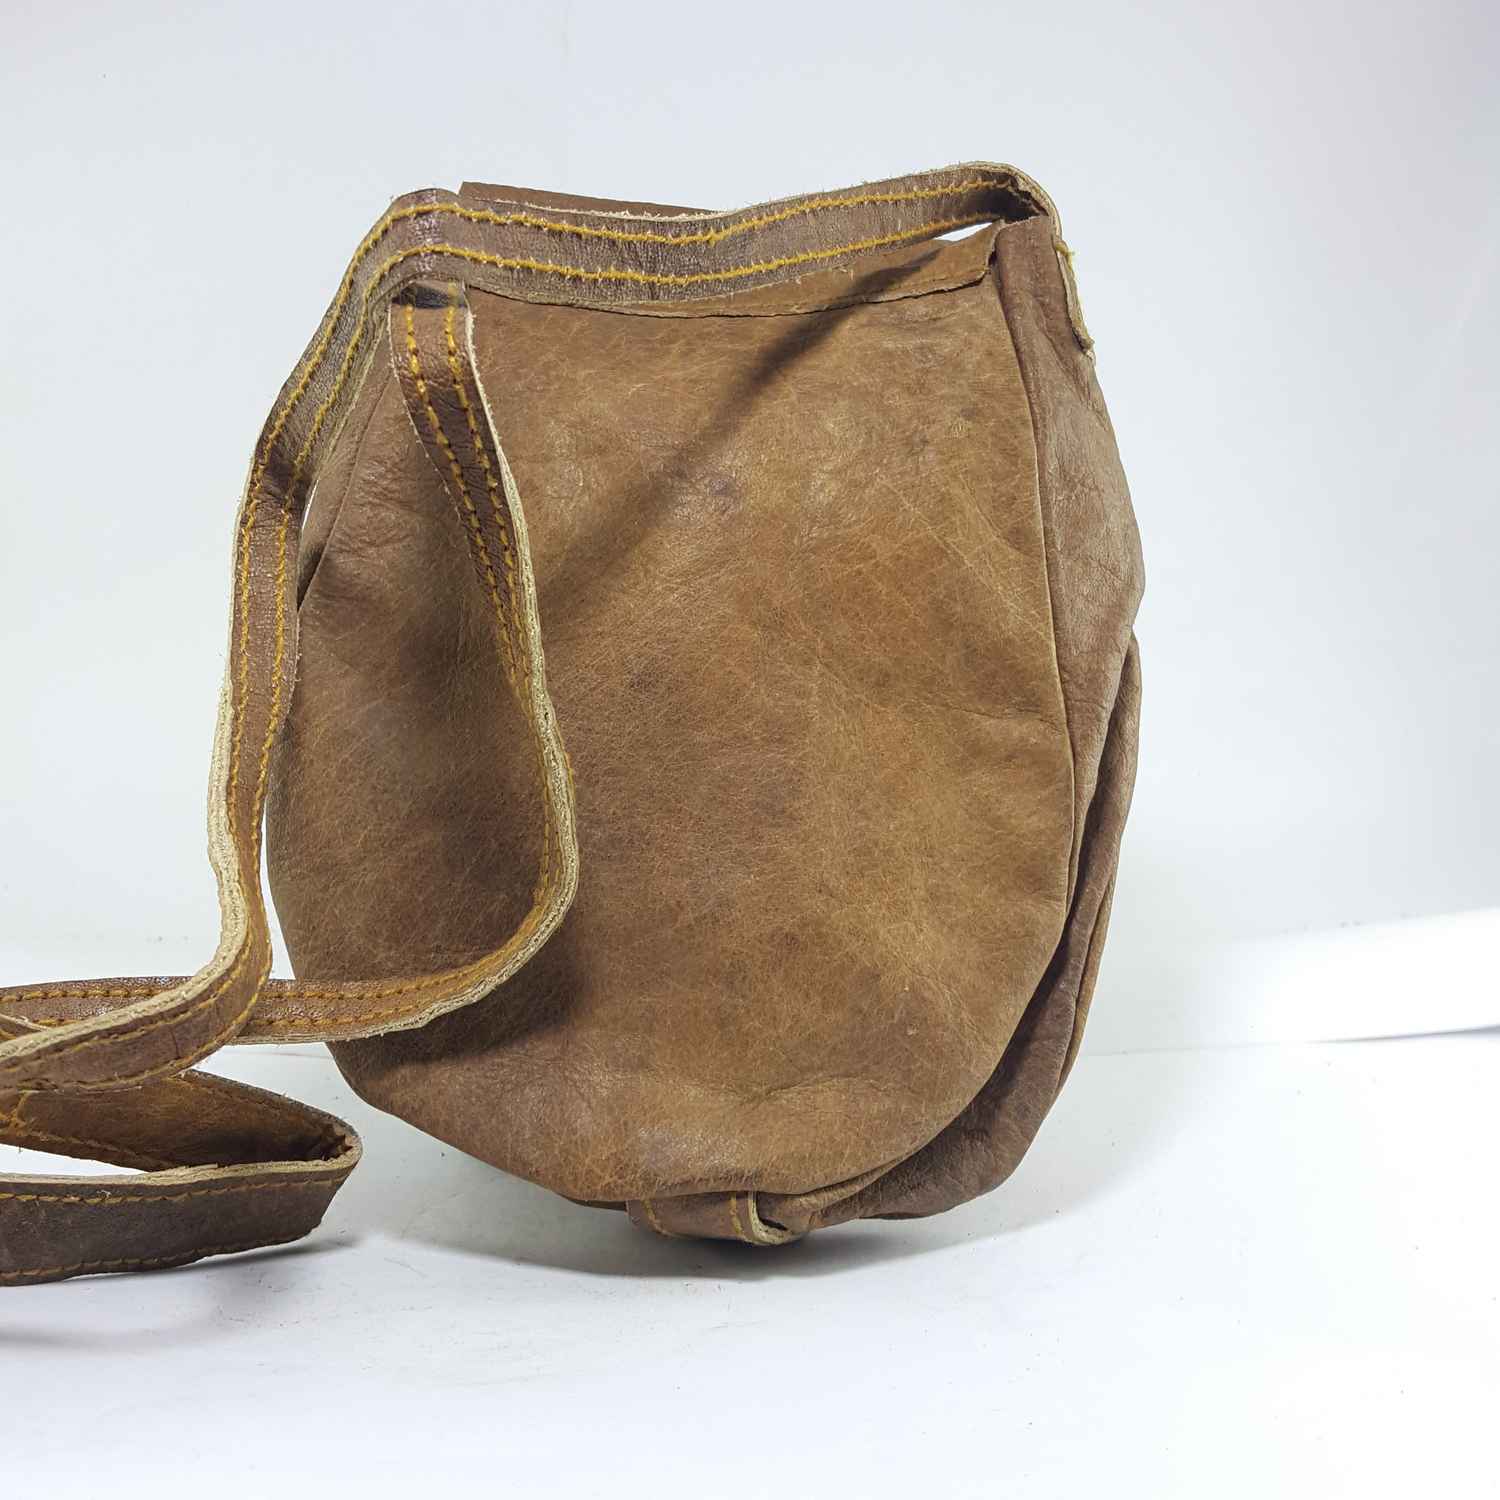 Pure Leather Handmade Shoulder Bag all Hand Stitched, 1 Pocket, leather Strip Lock